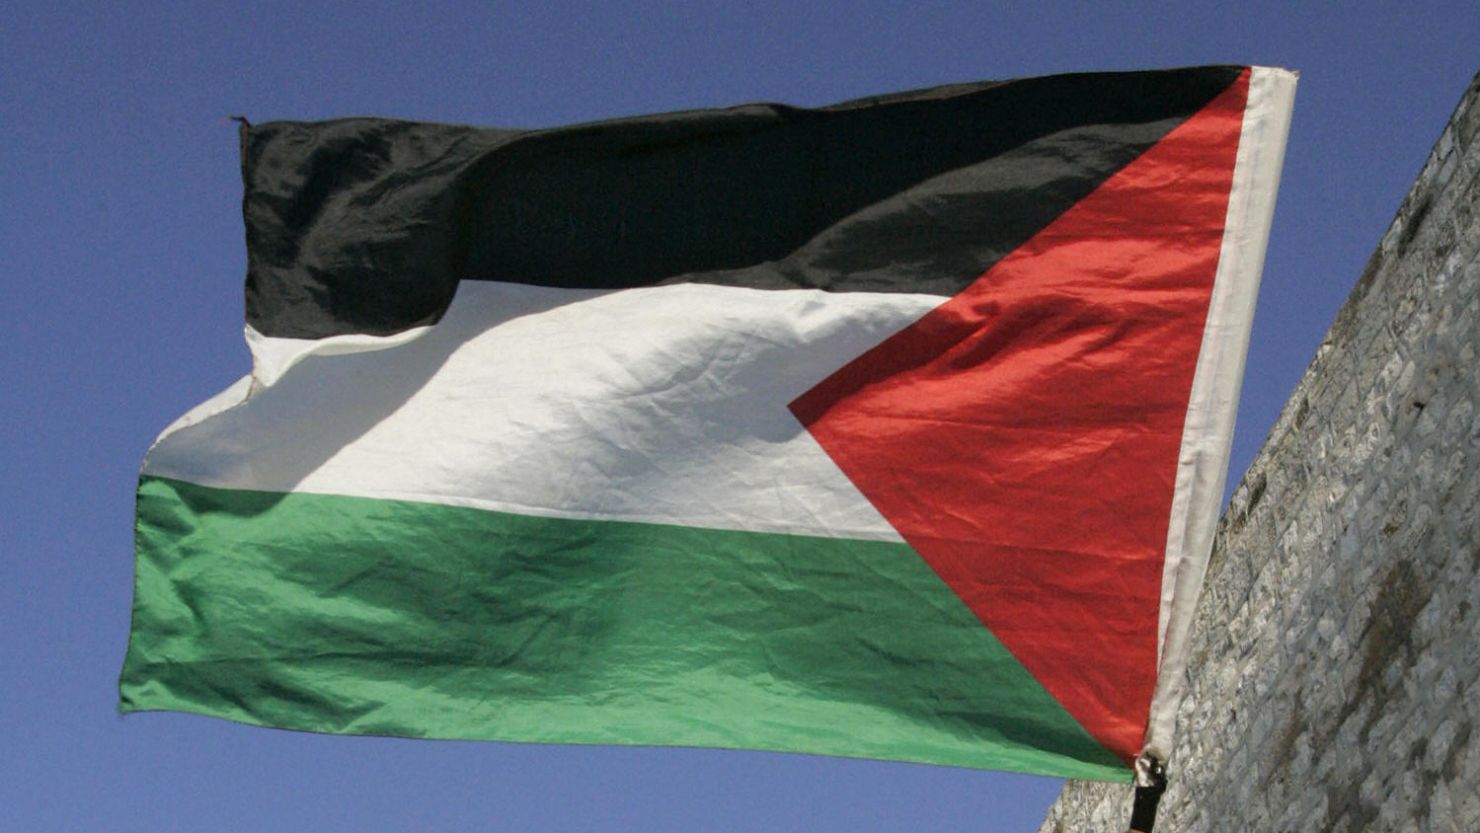 Adalah: Q & A on the Legality of Waving the Palestinian Flag - Adalah